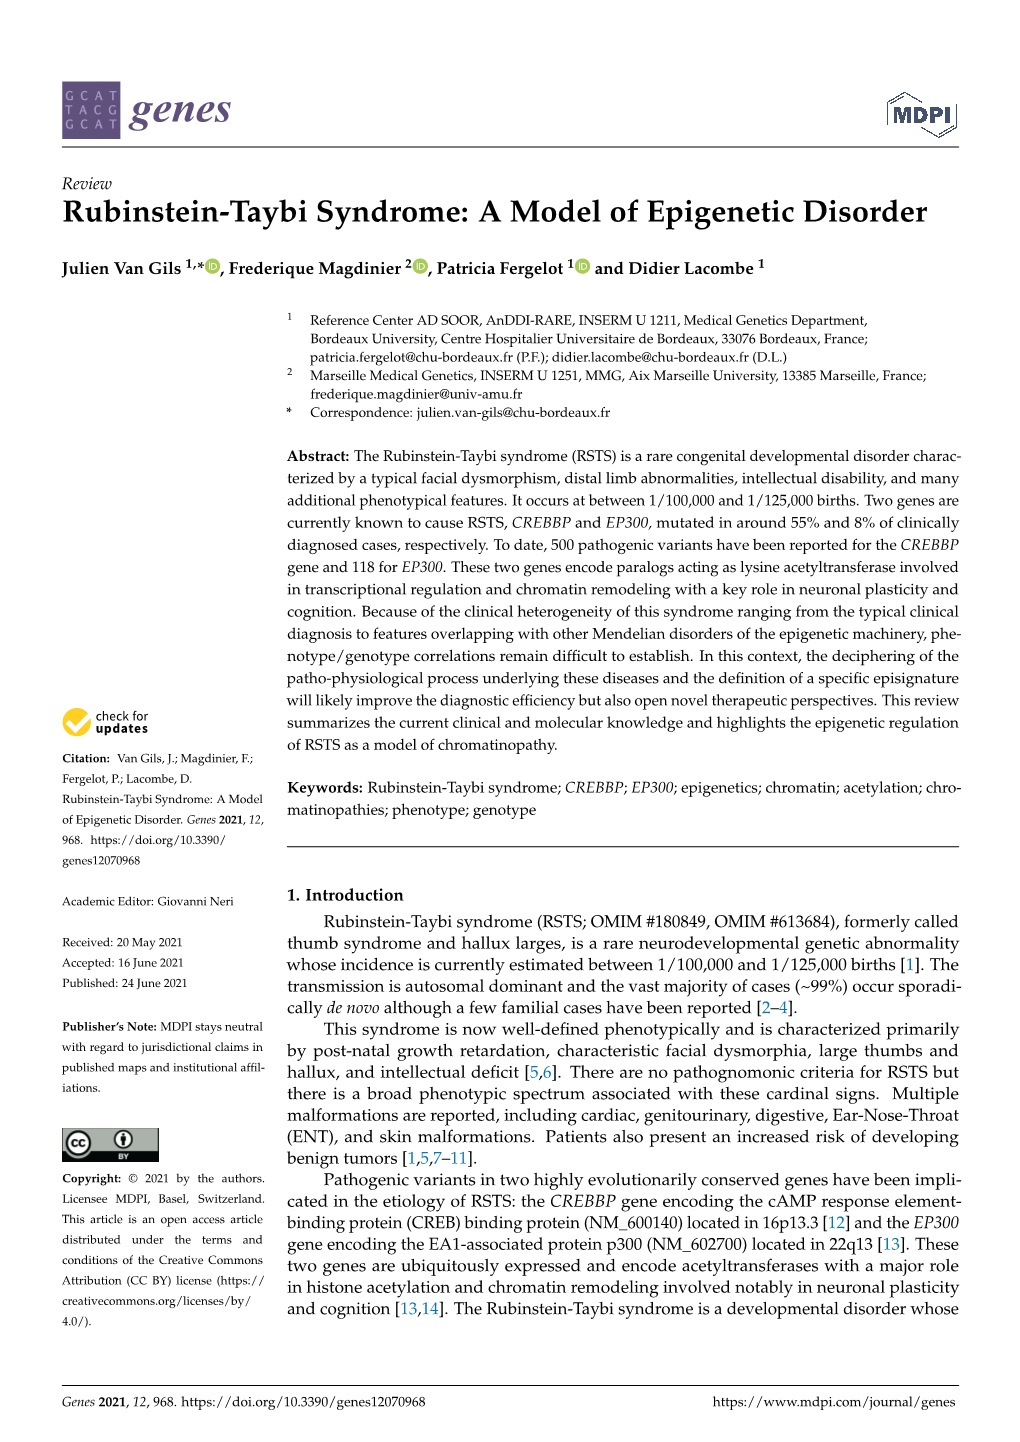 Rubinstein-Taybi Syndrome: a Model of Epigenetic Disorder